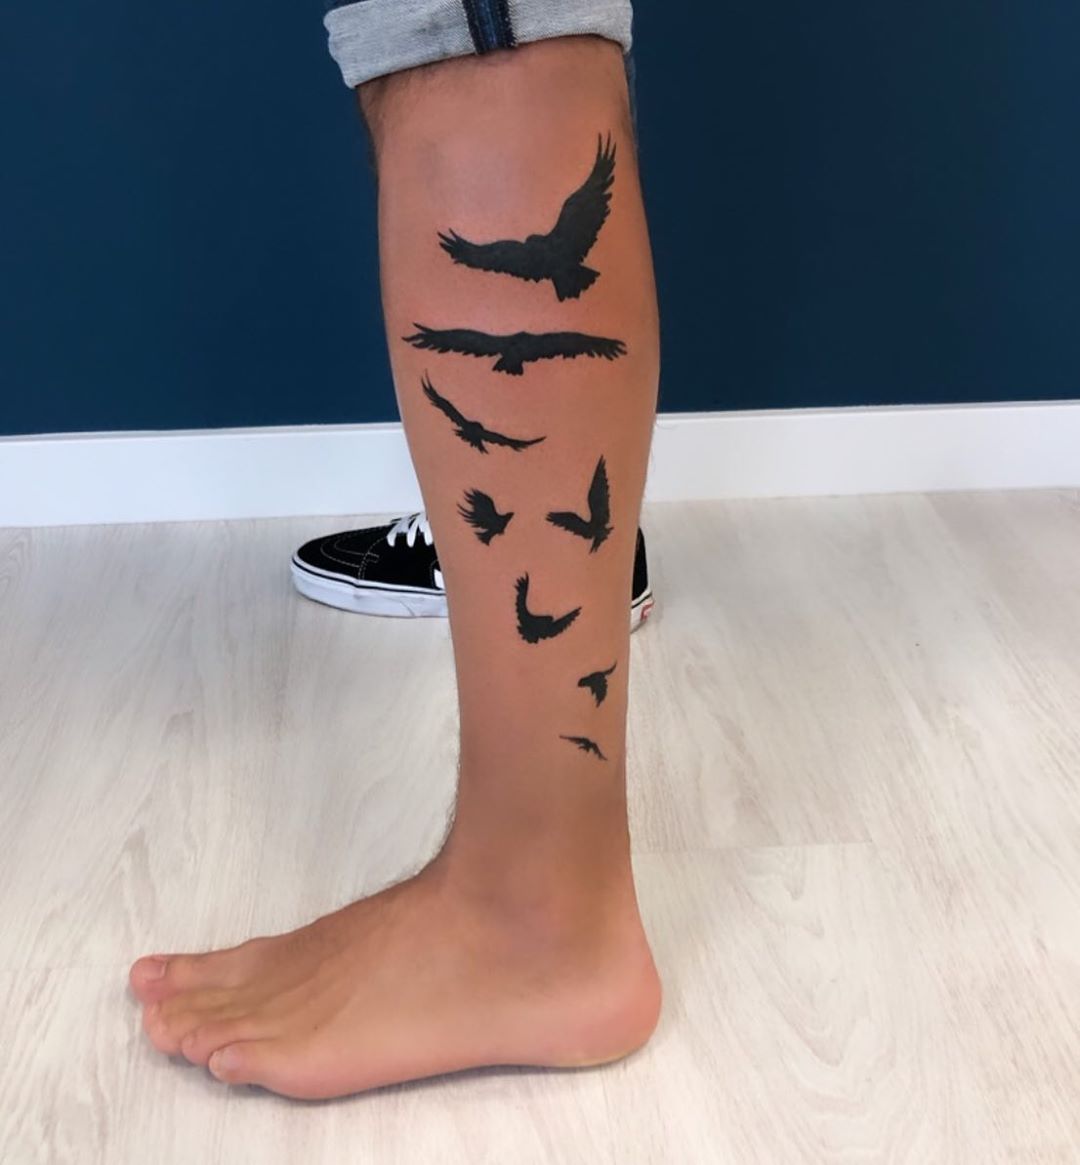 bird tattoo design ideas